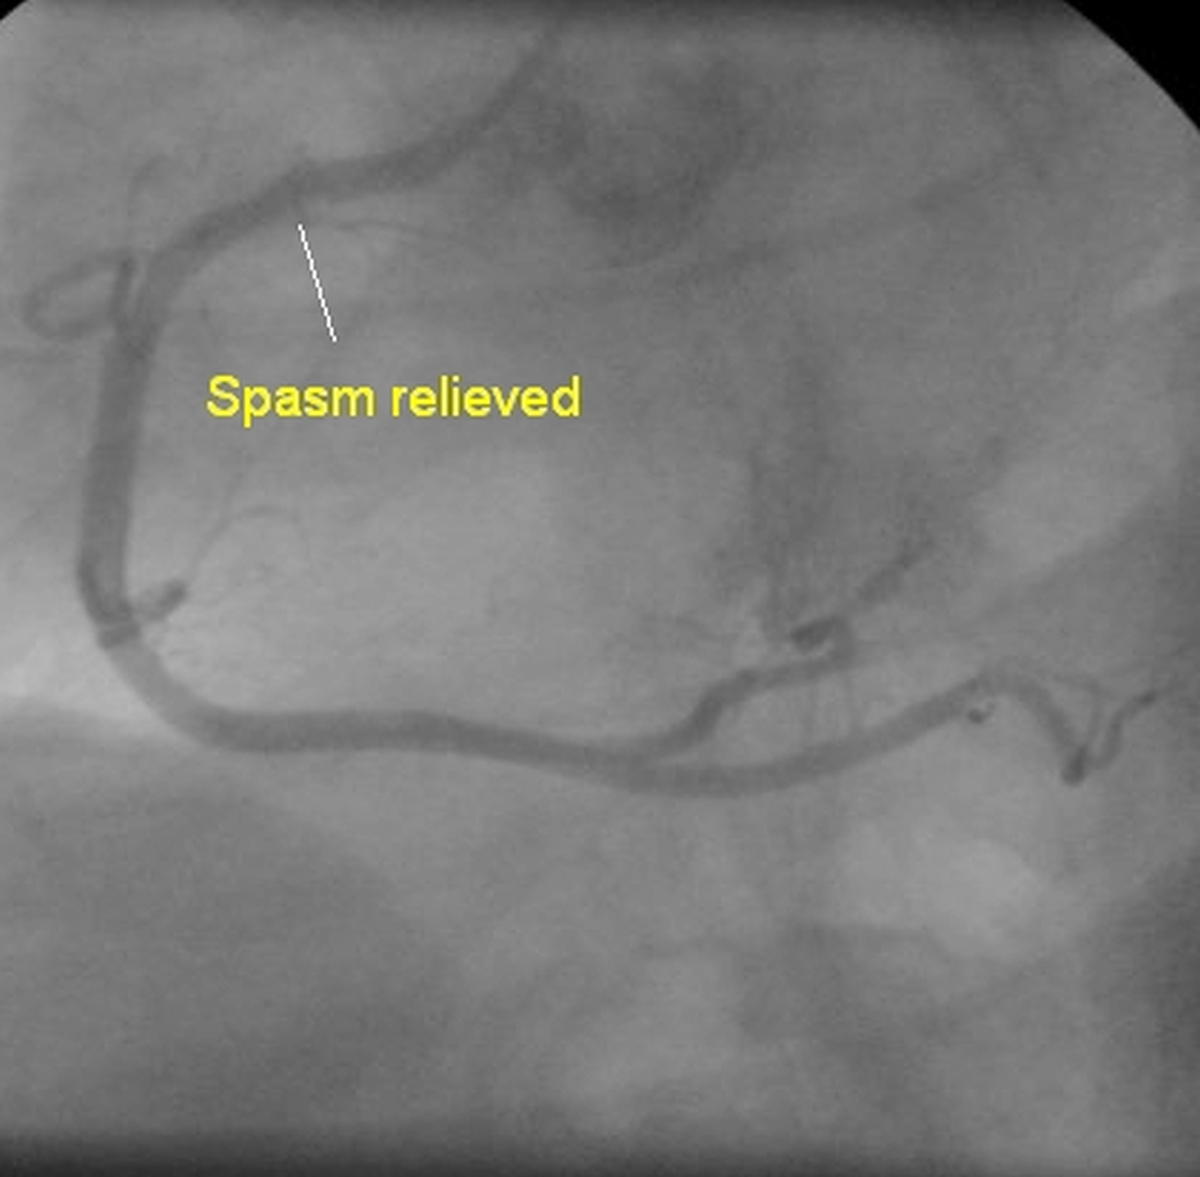 Spasm of right coronary artery relieved with nitroglycerine